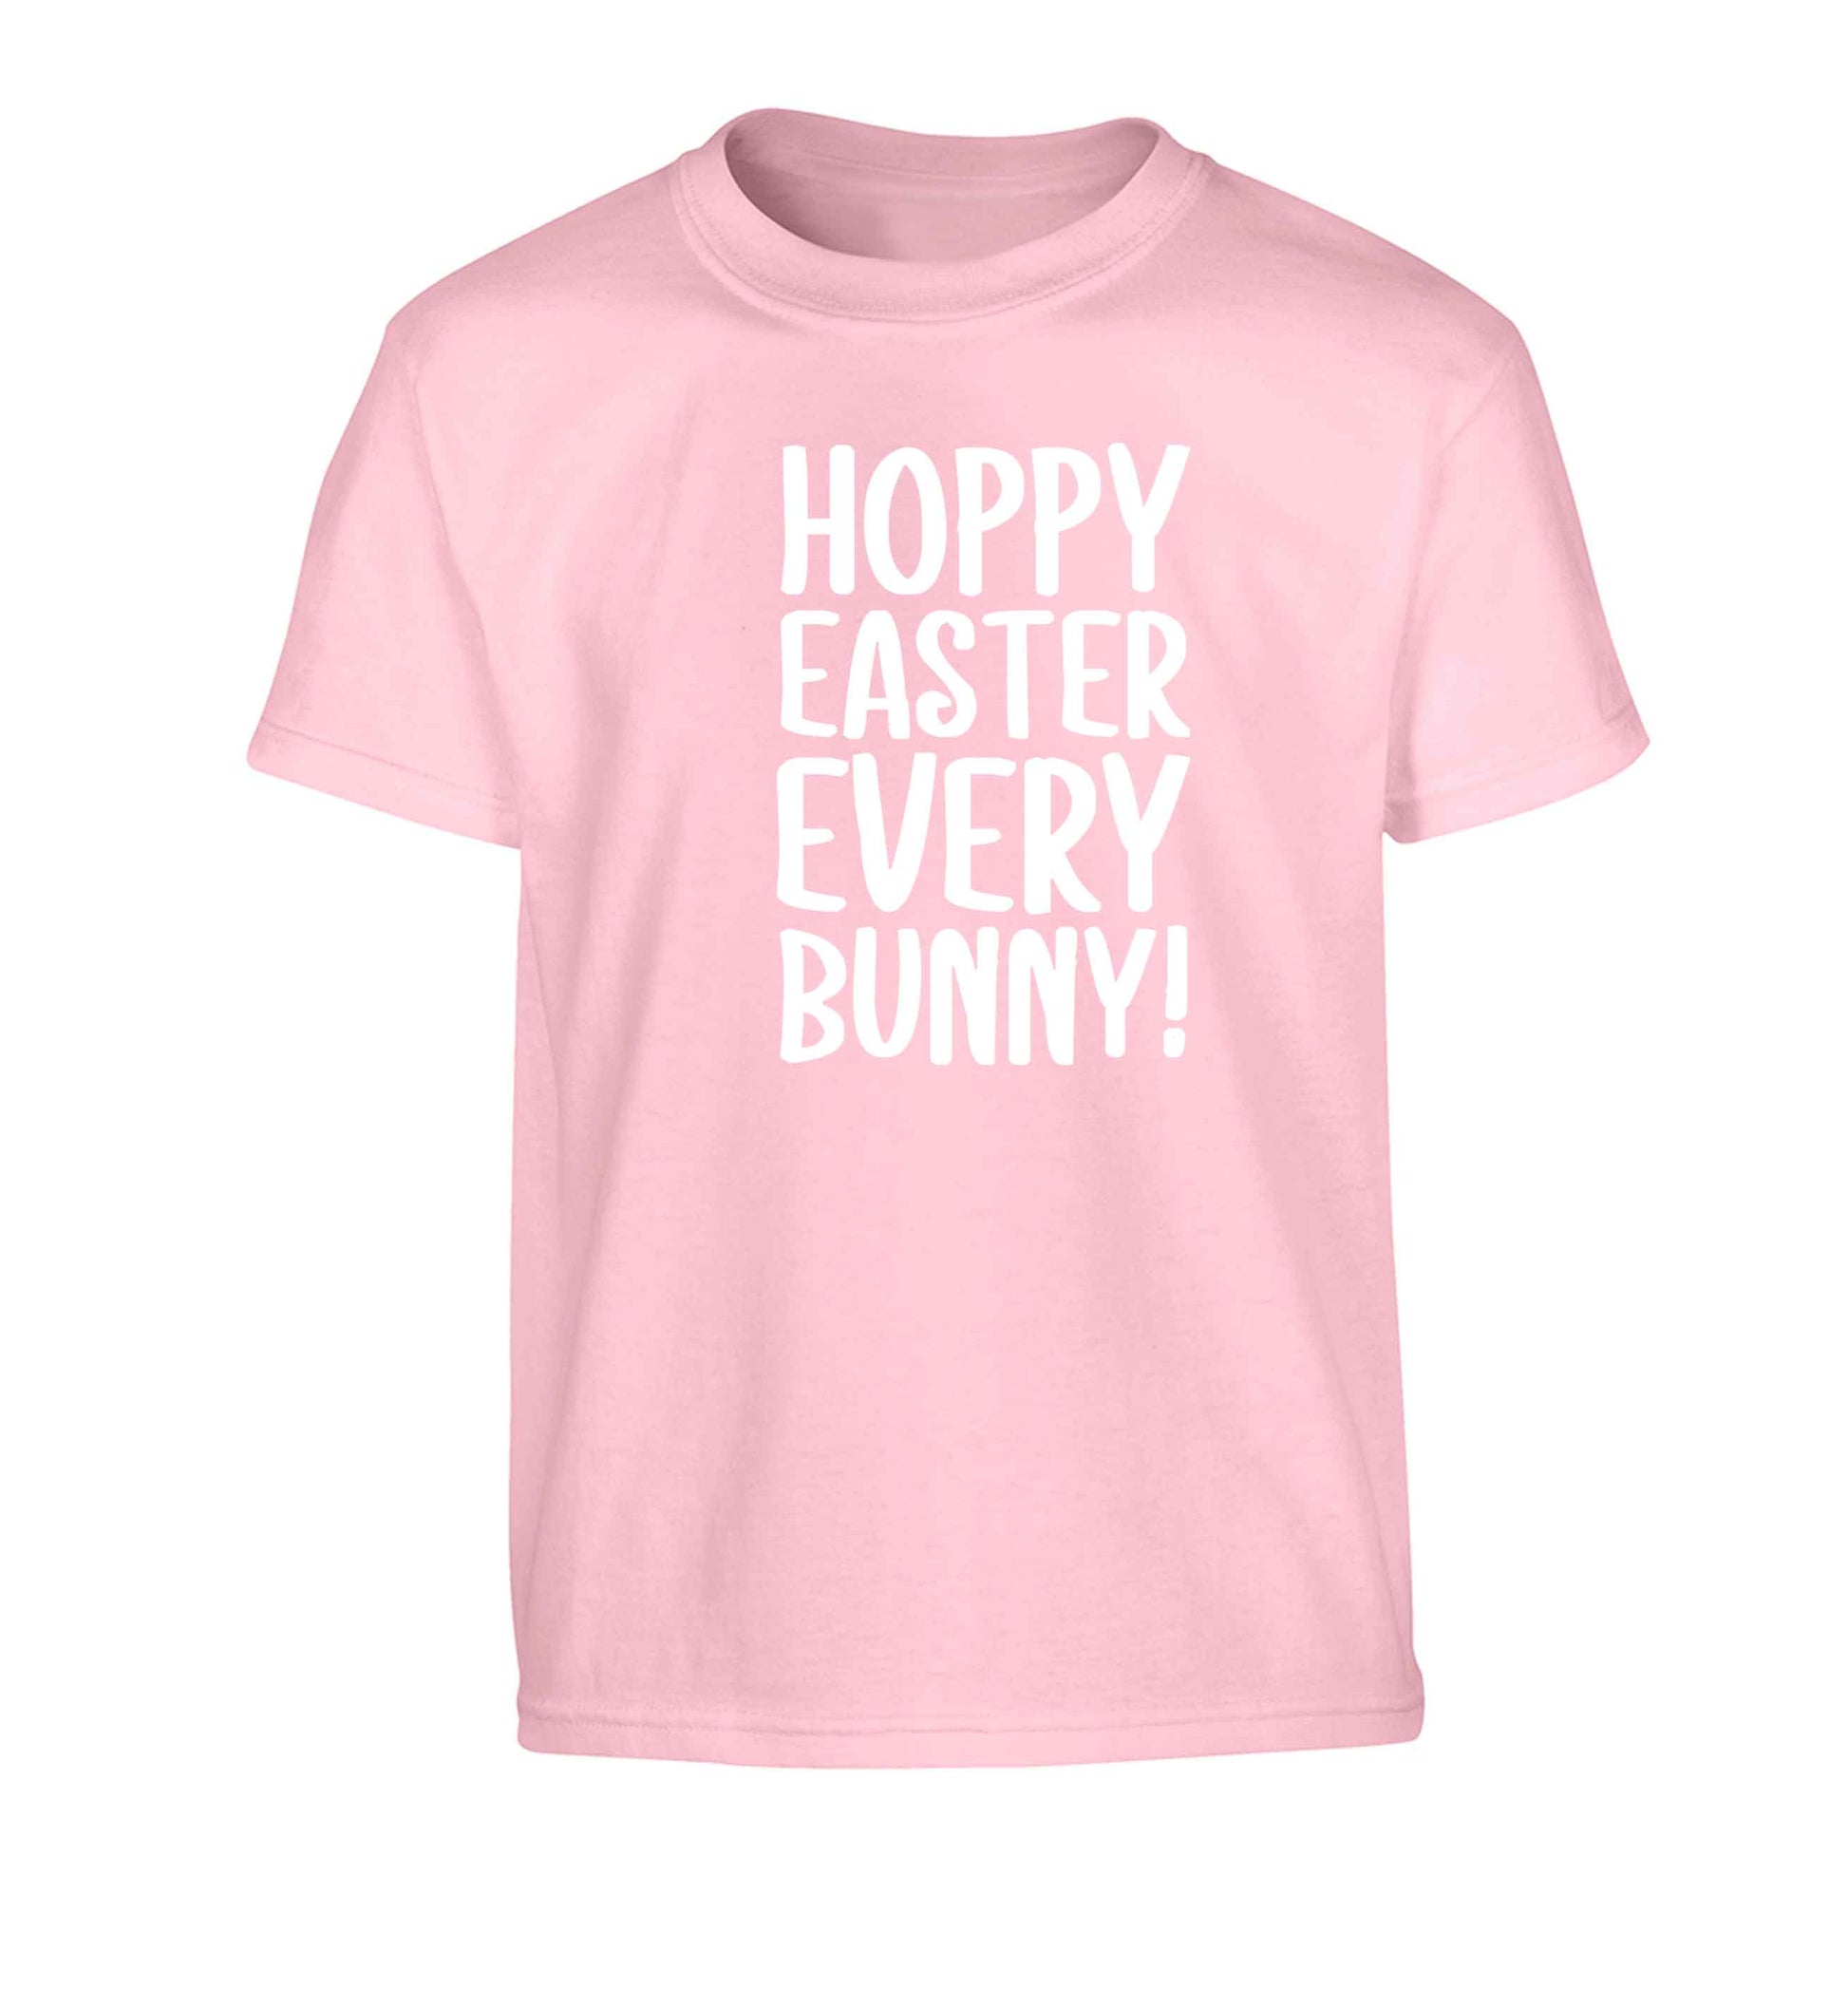 Hoppy Easter every bunny! Children's light pink Tshirt 12-13 Years